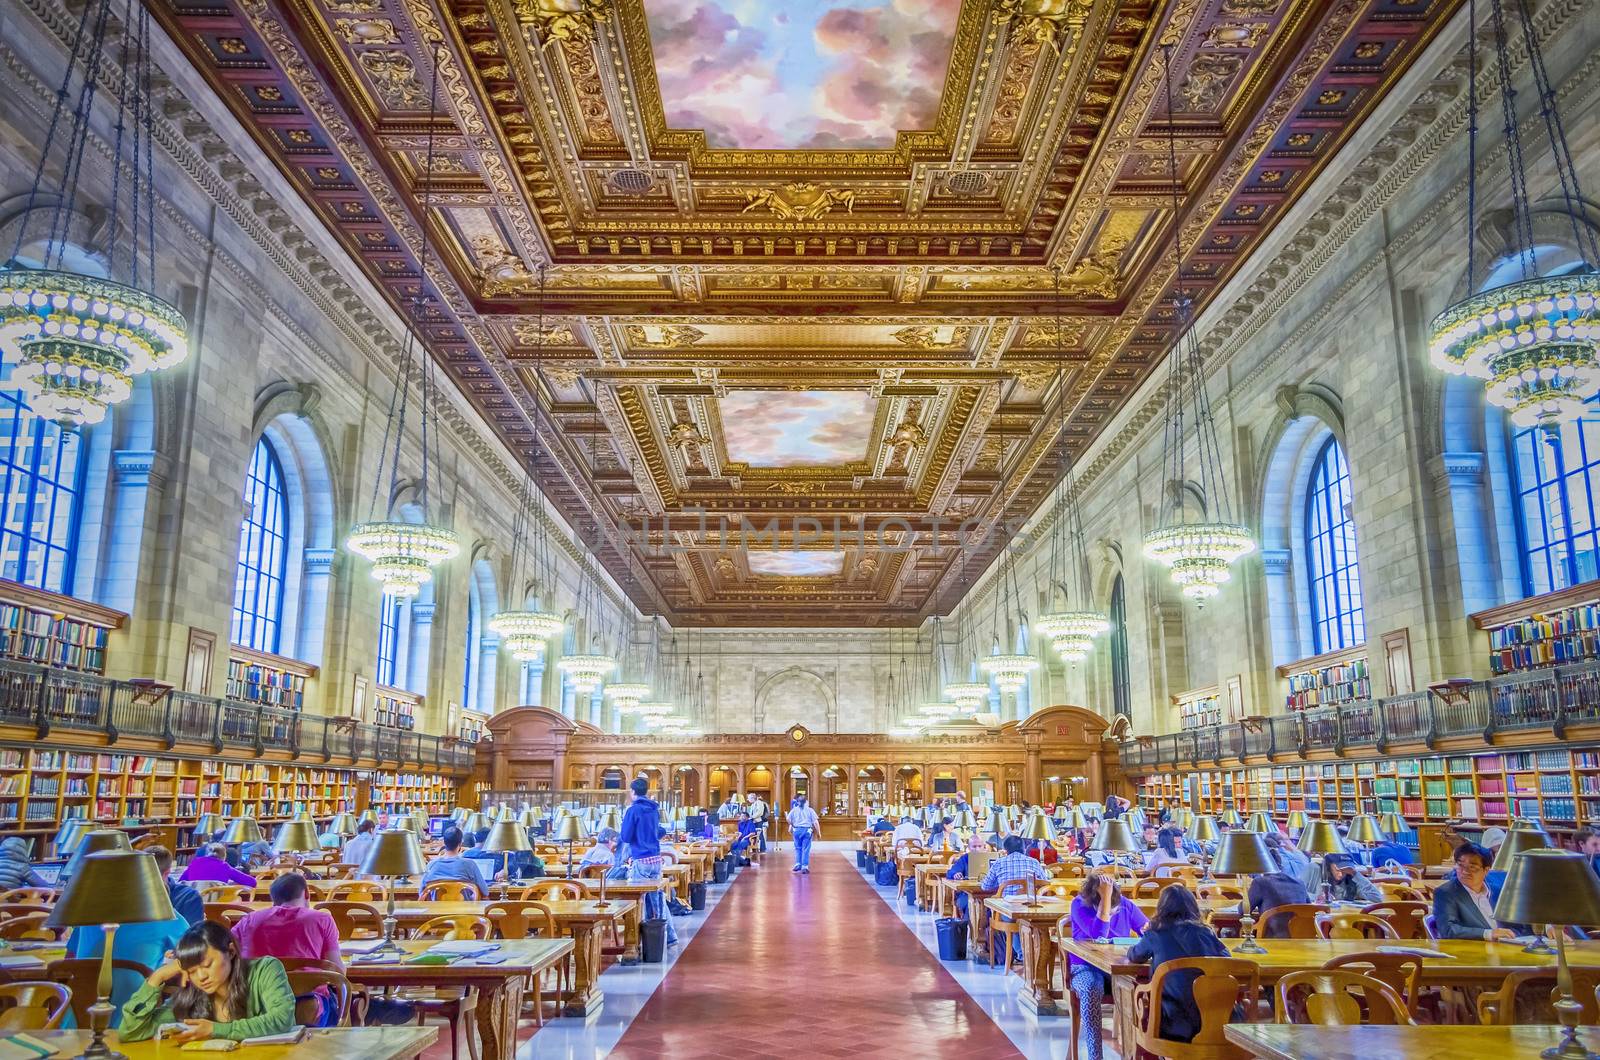 New York Public Library by marcorubino